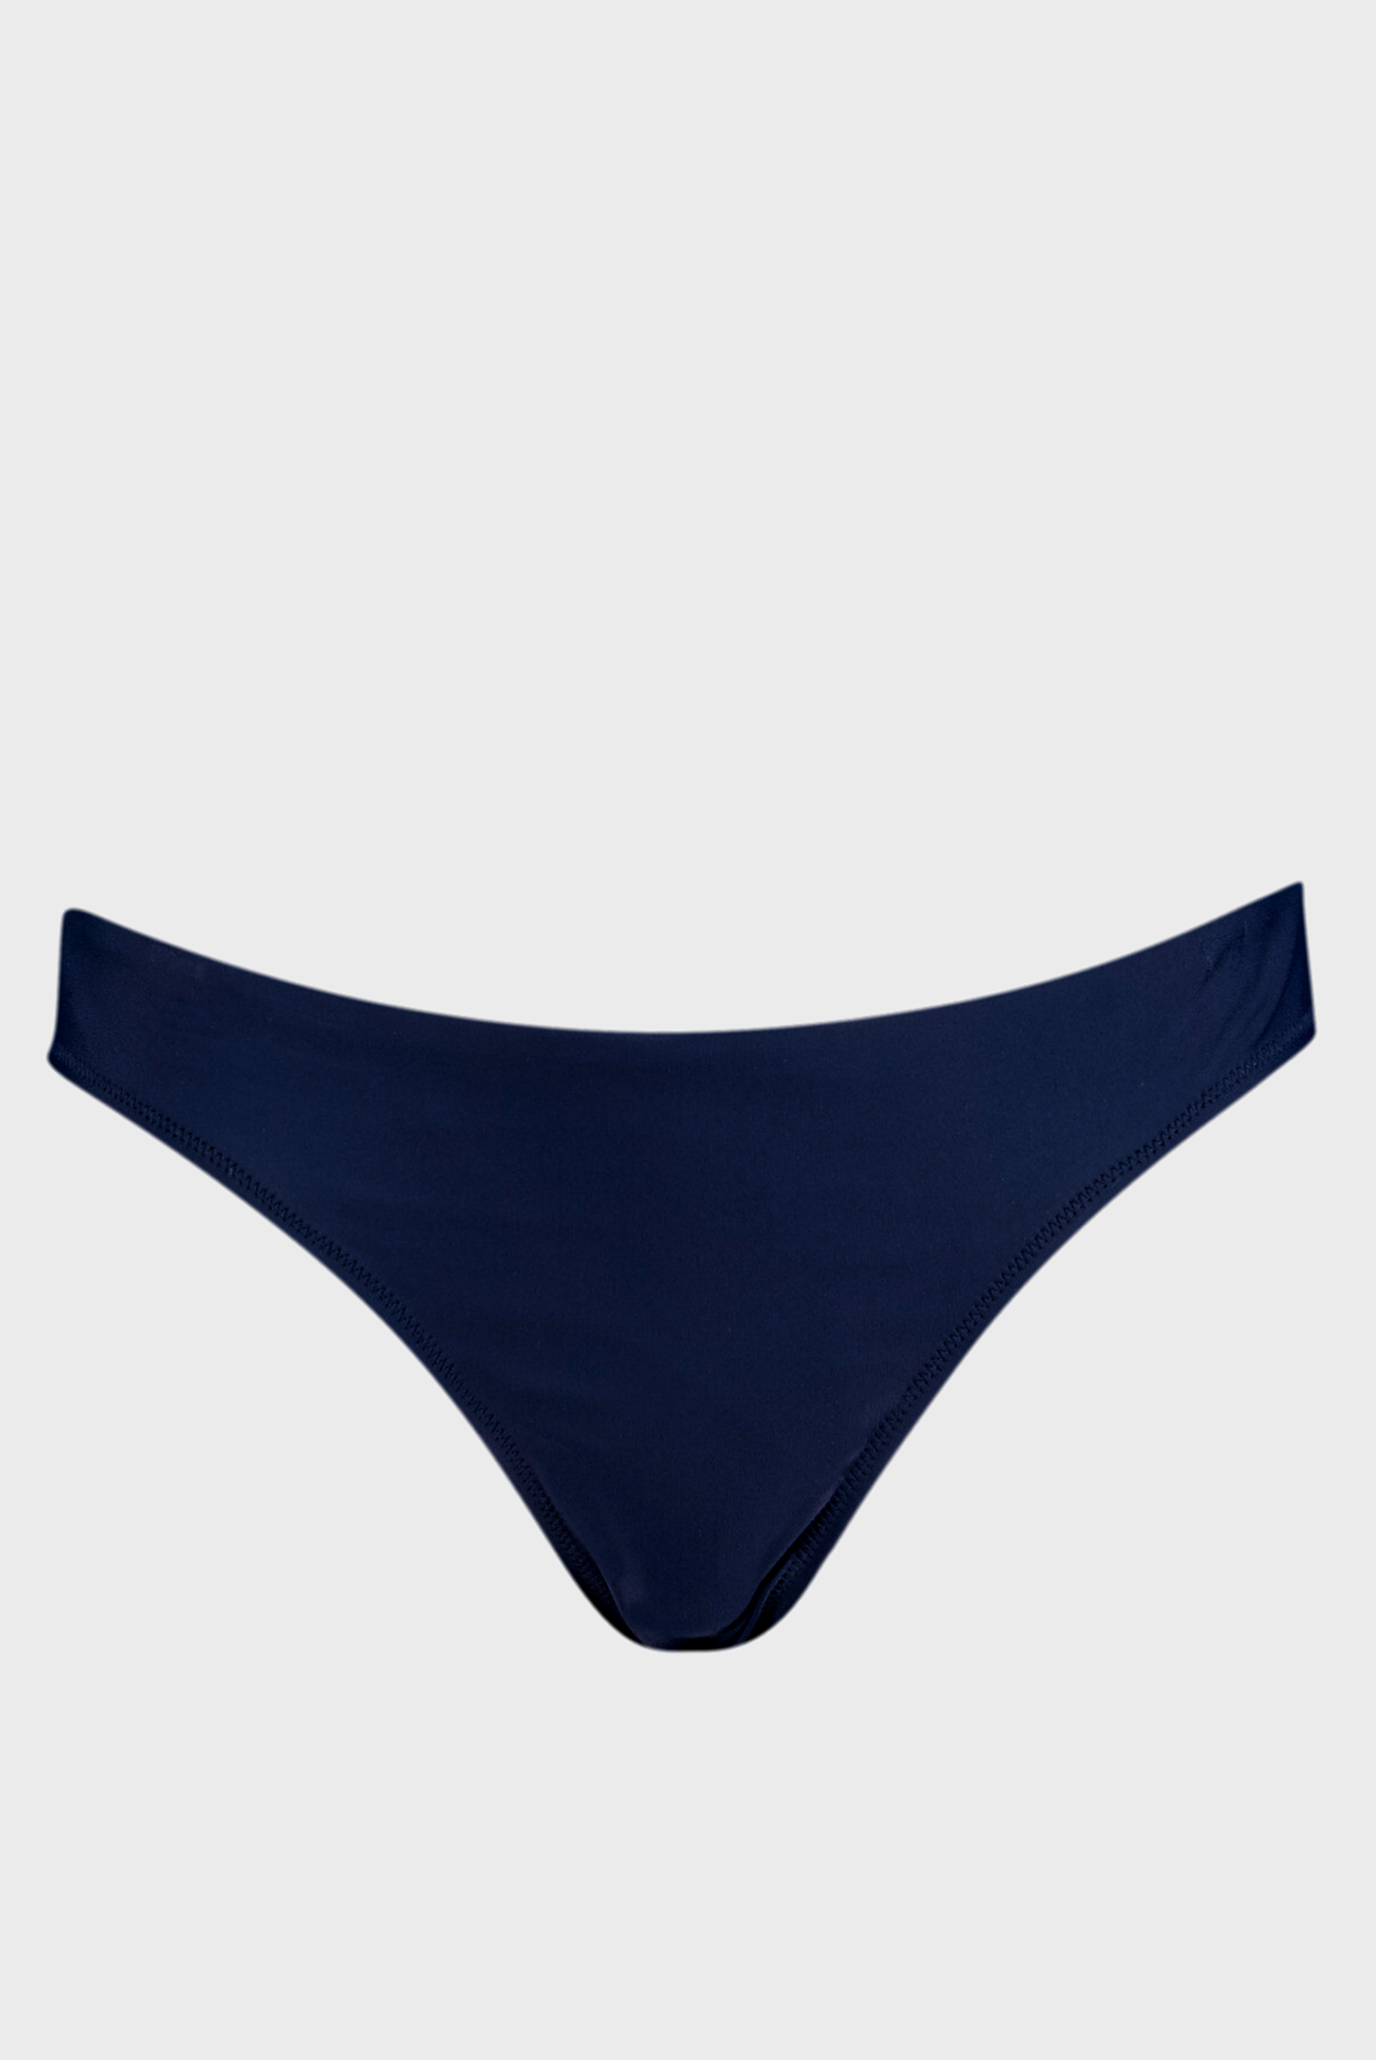 Женские темно-синие трусики от купальника PUMA Women's Brazilian Swim Bottoms 1